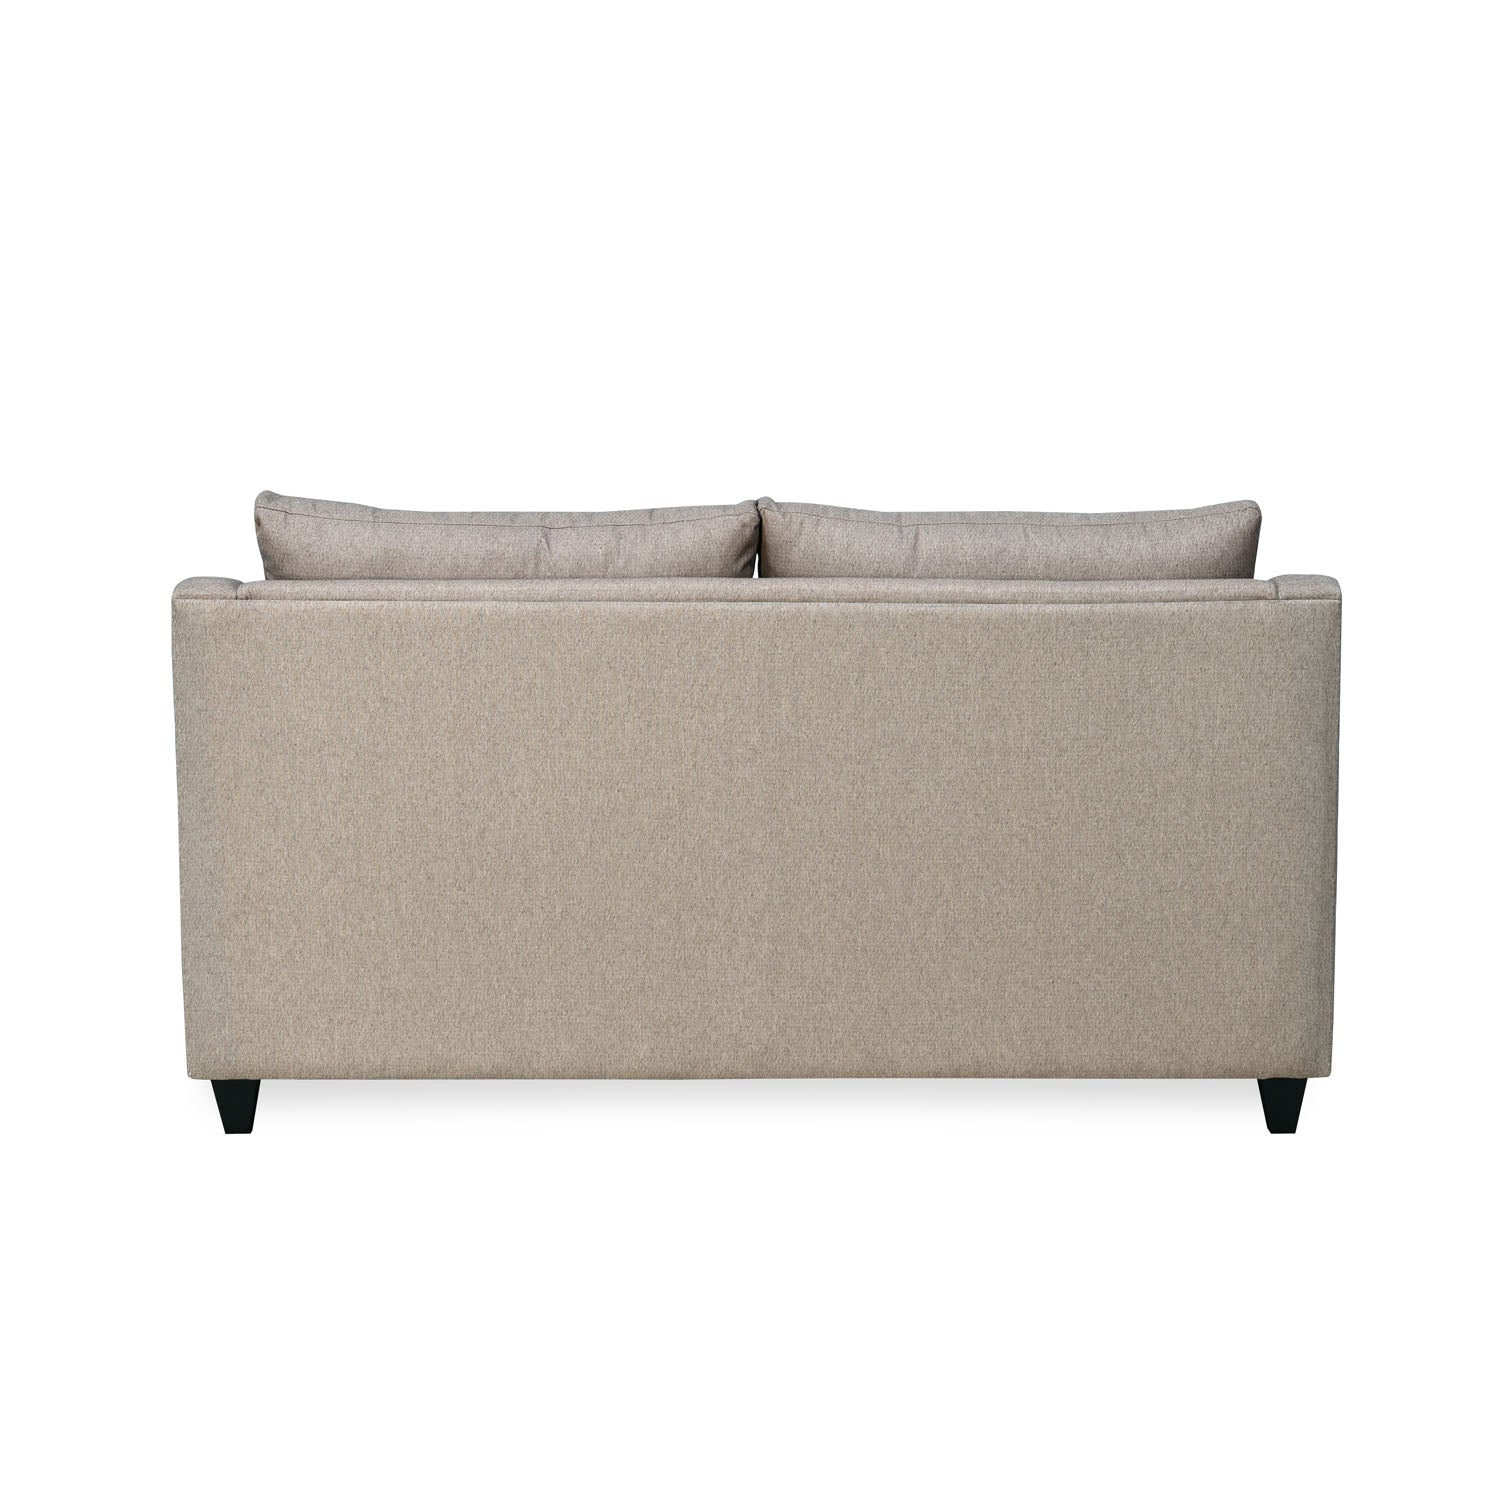 Brutus 3 Seater Fabric Sofa (Light Brown)